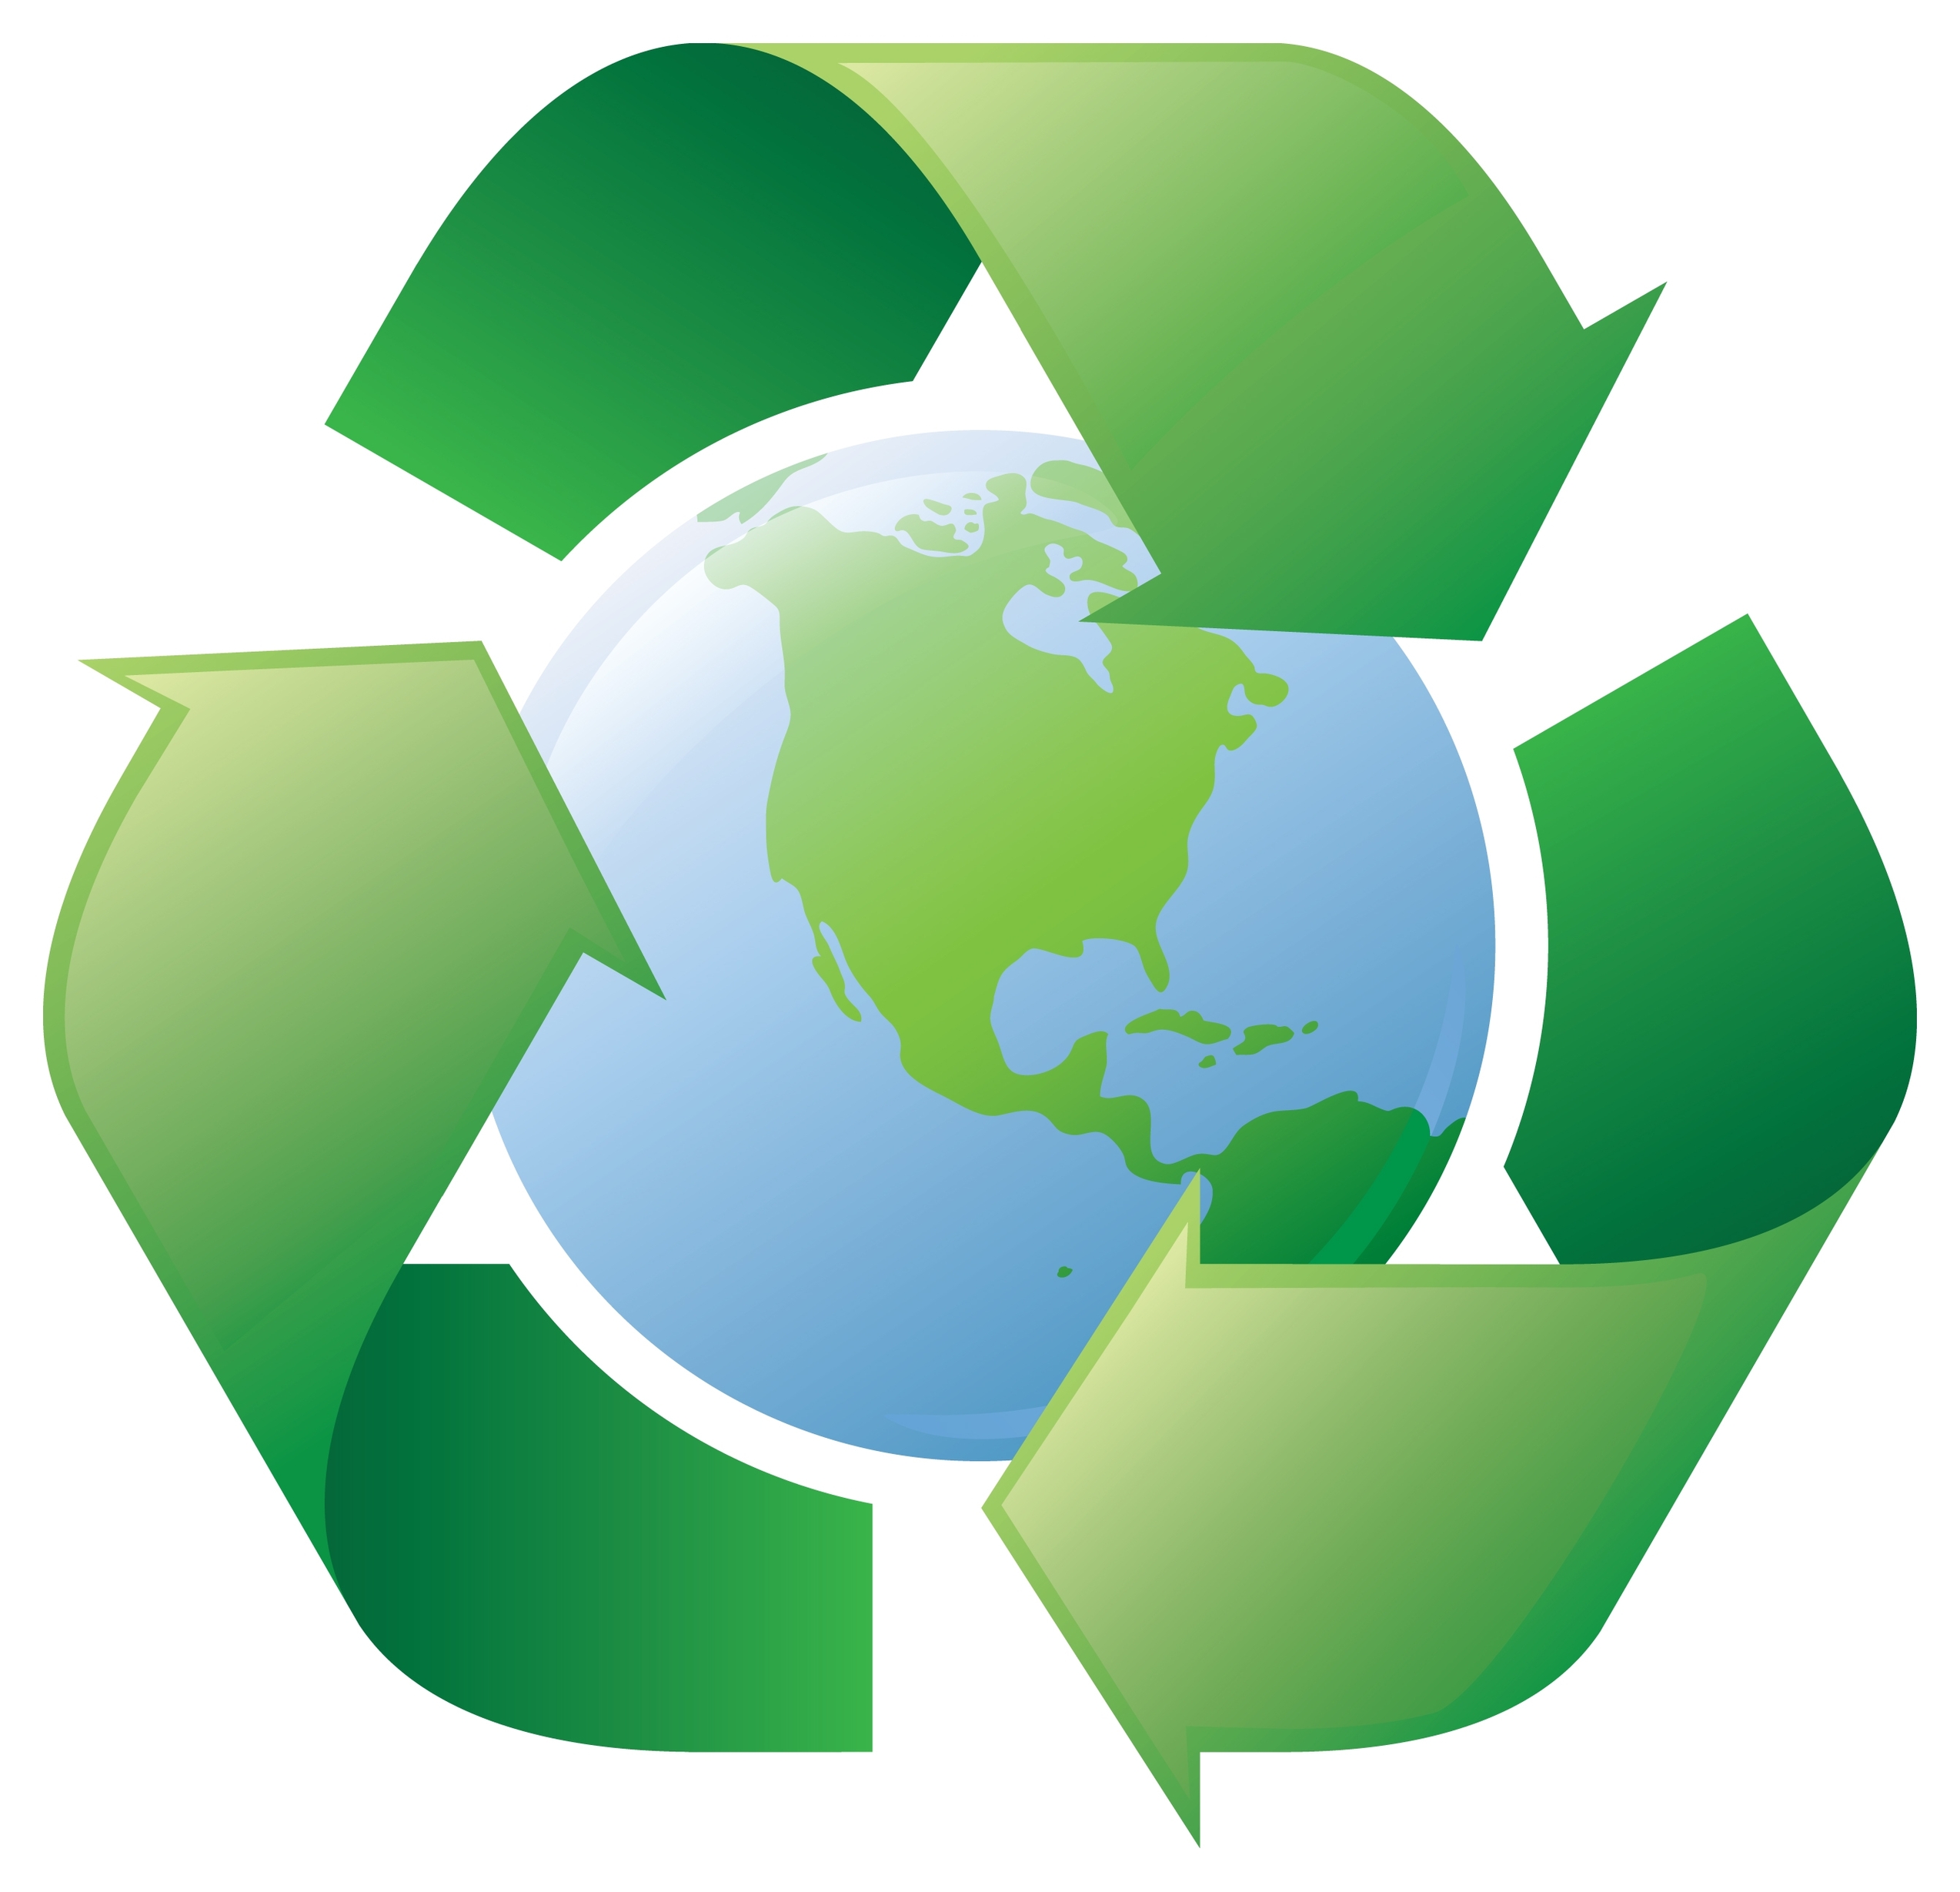 Recycling logo clip art